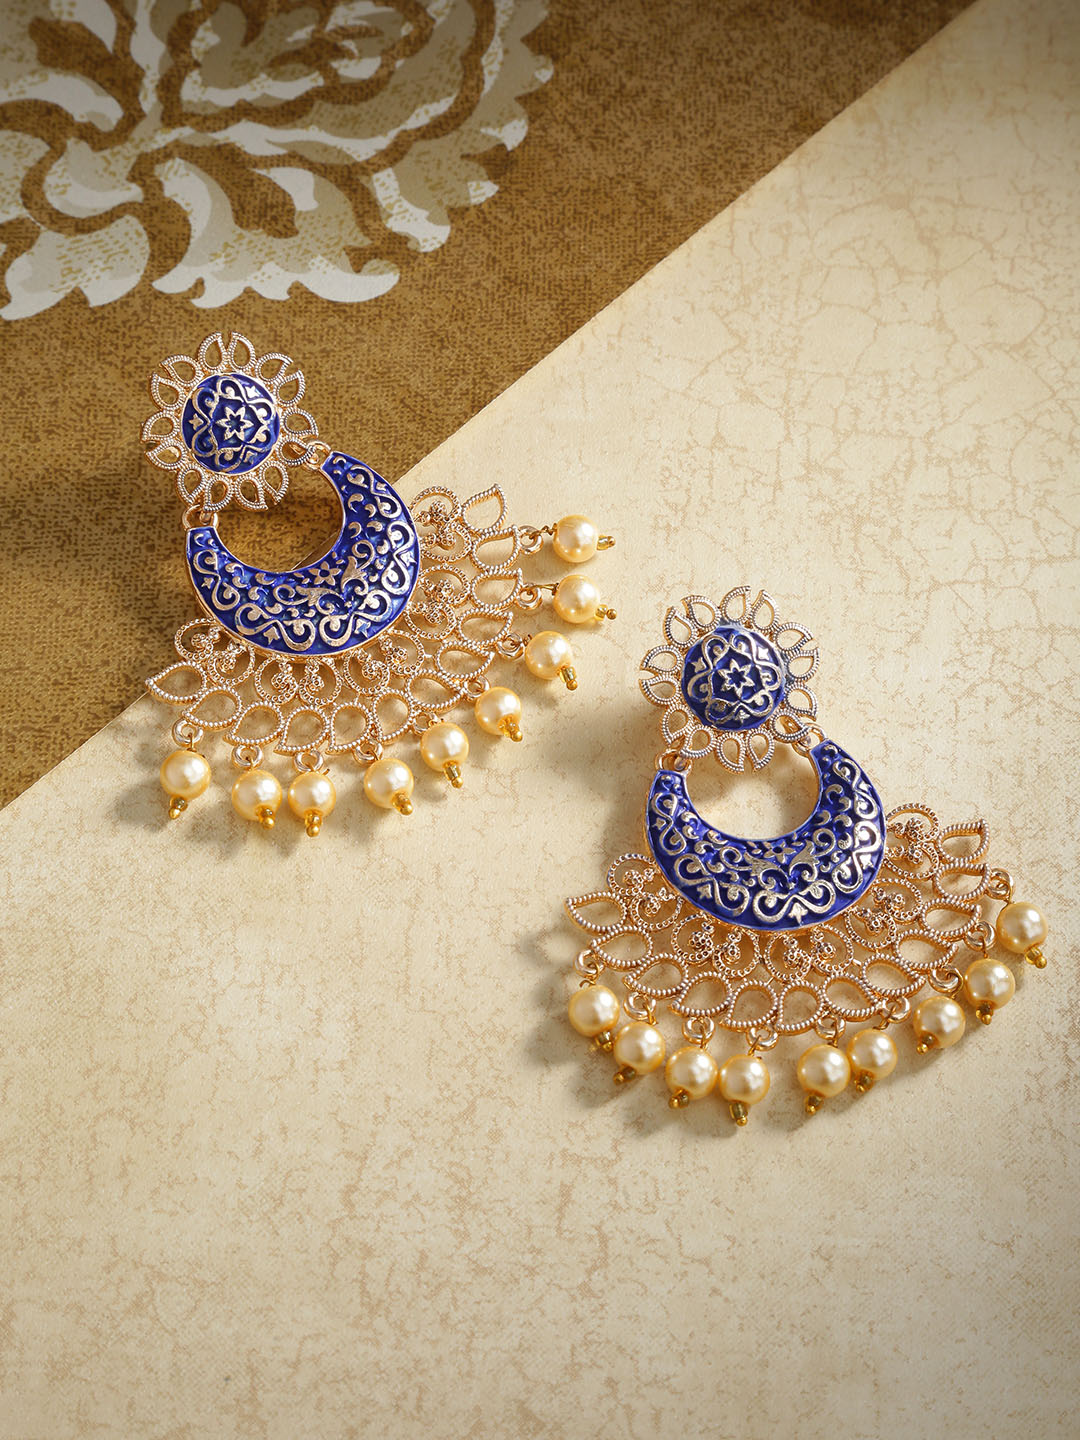 Gold-Plated Meenakari Chandbali Earrings in Navy Blue Color with Pearls Drop